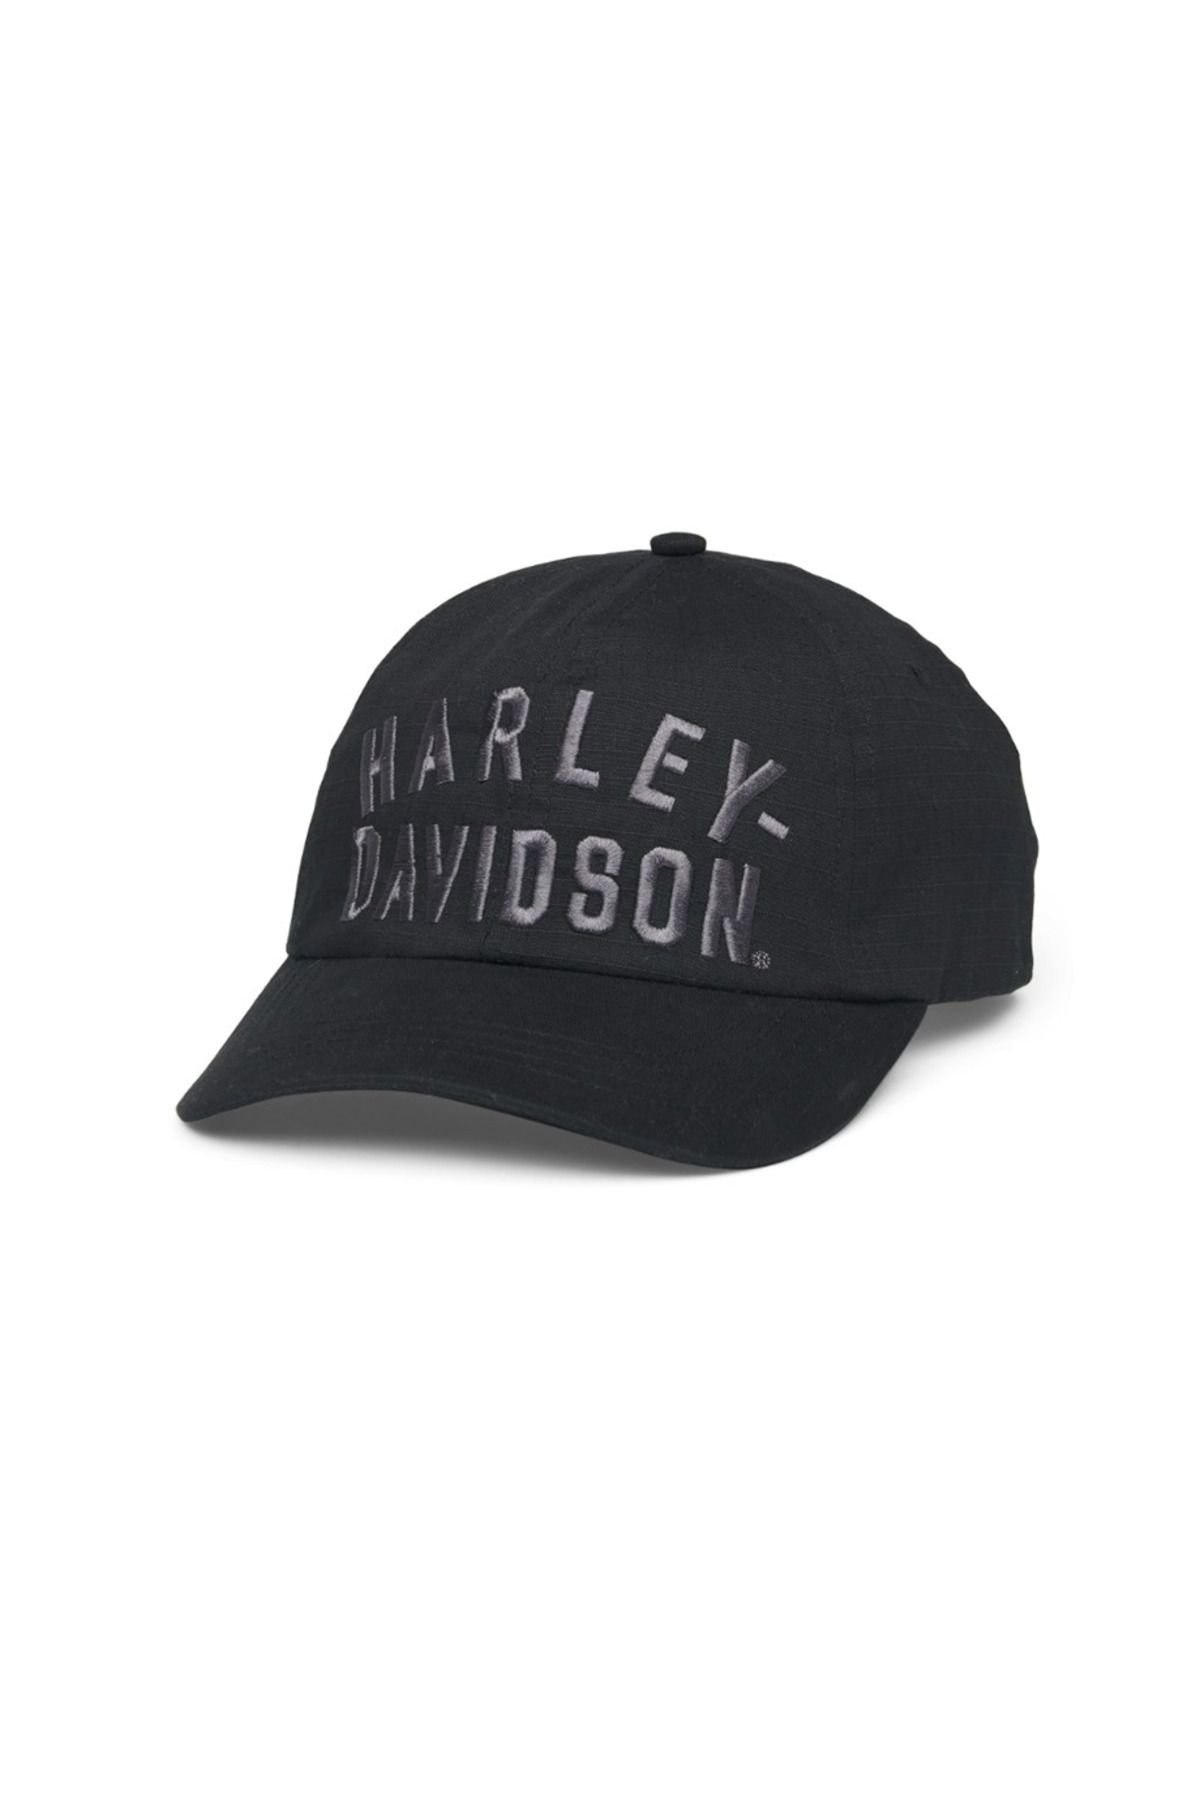 Harley Davidson Harley-davidson Men's Staple Dad Cap - Black